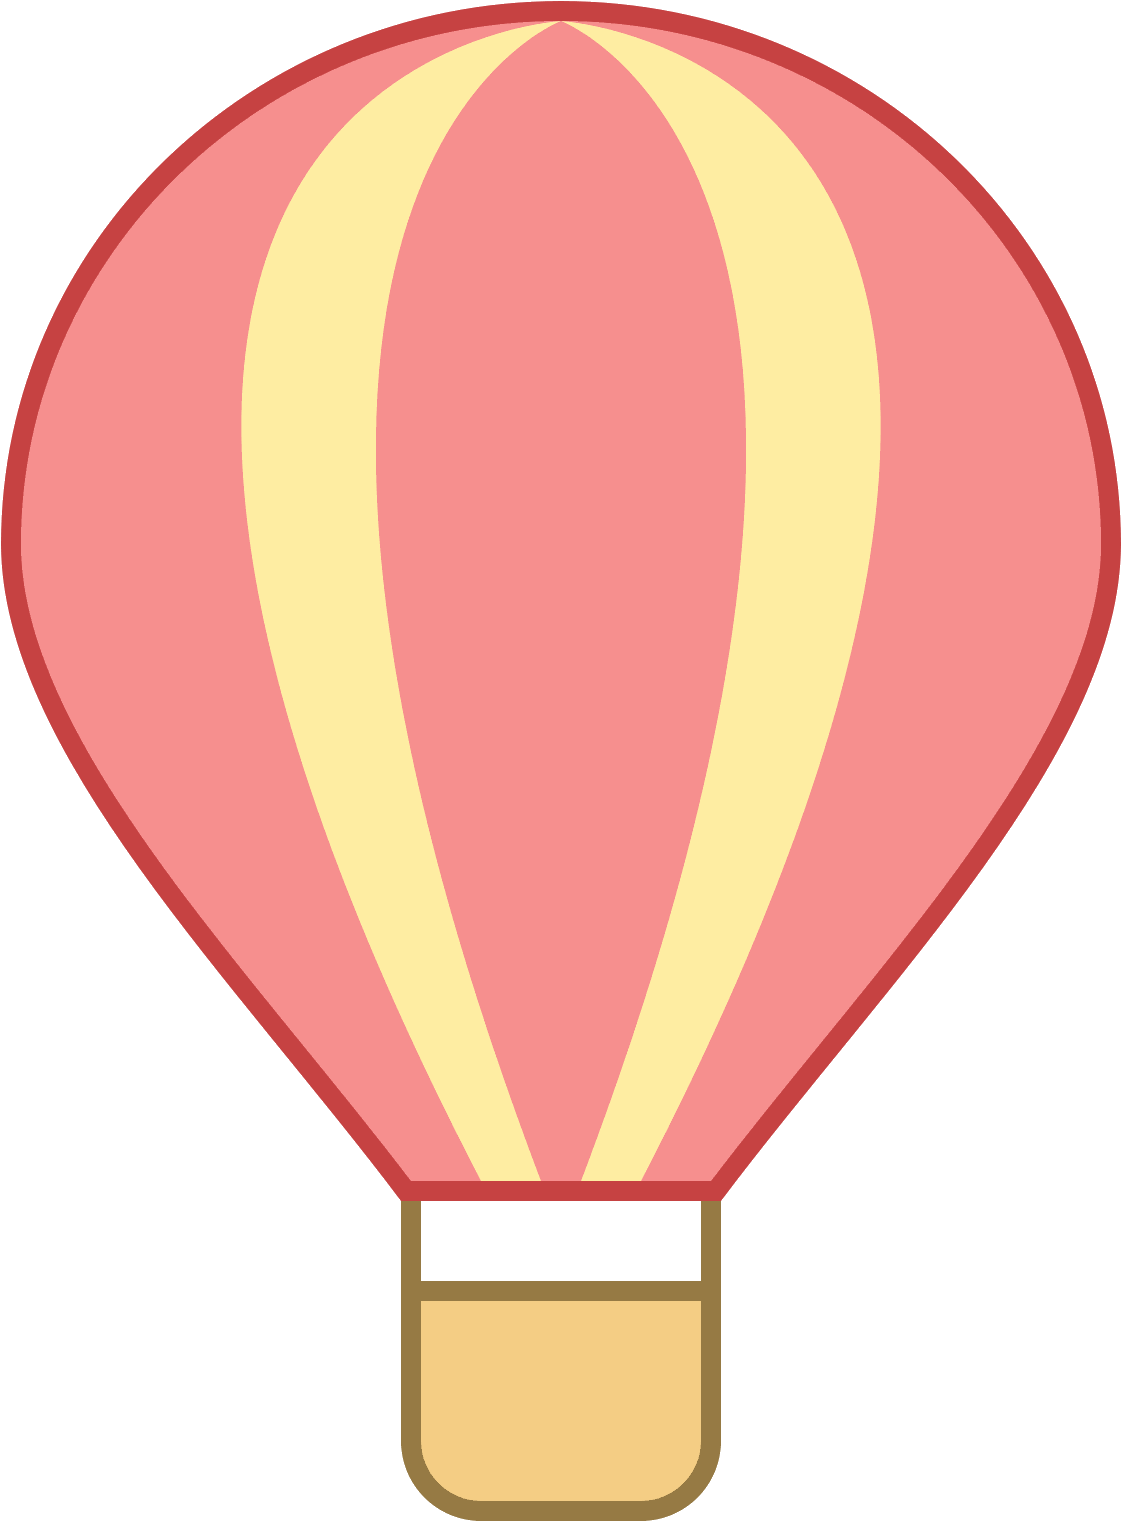 This Looks Like A Hot Air Balloon - Hot Air Balloon Icon Png (1600x1600)